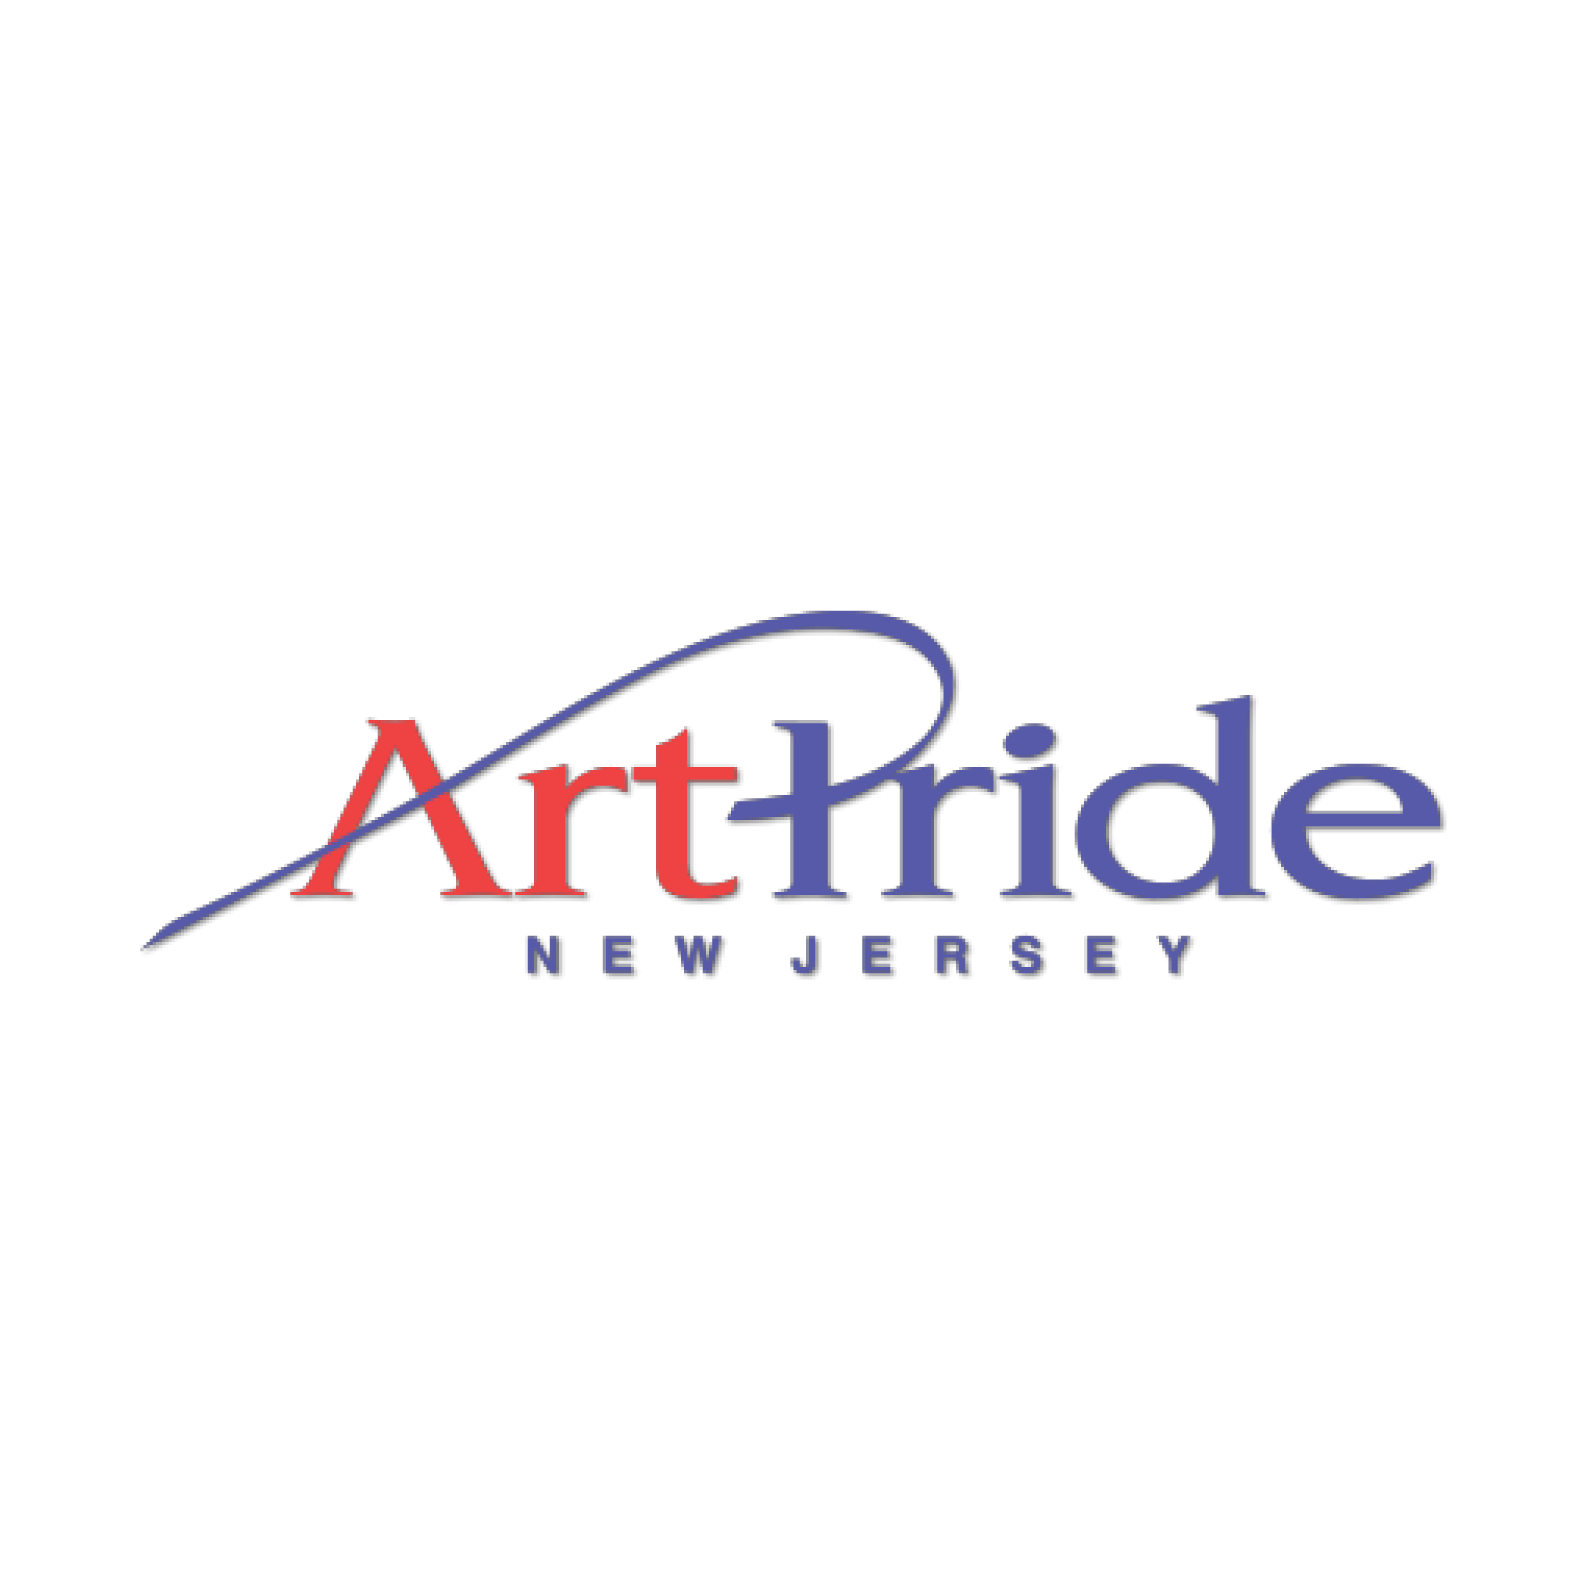 ArtPride New Jersey